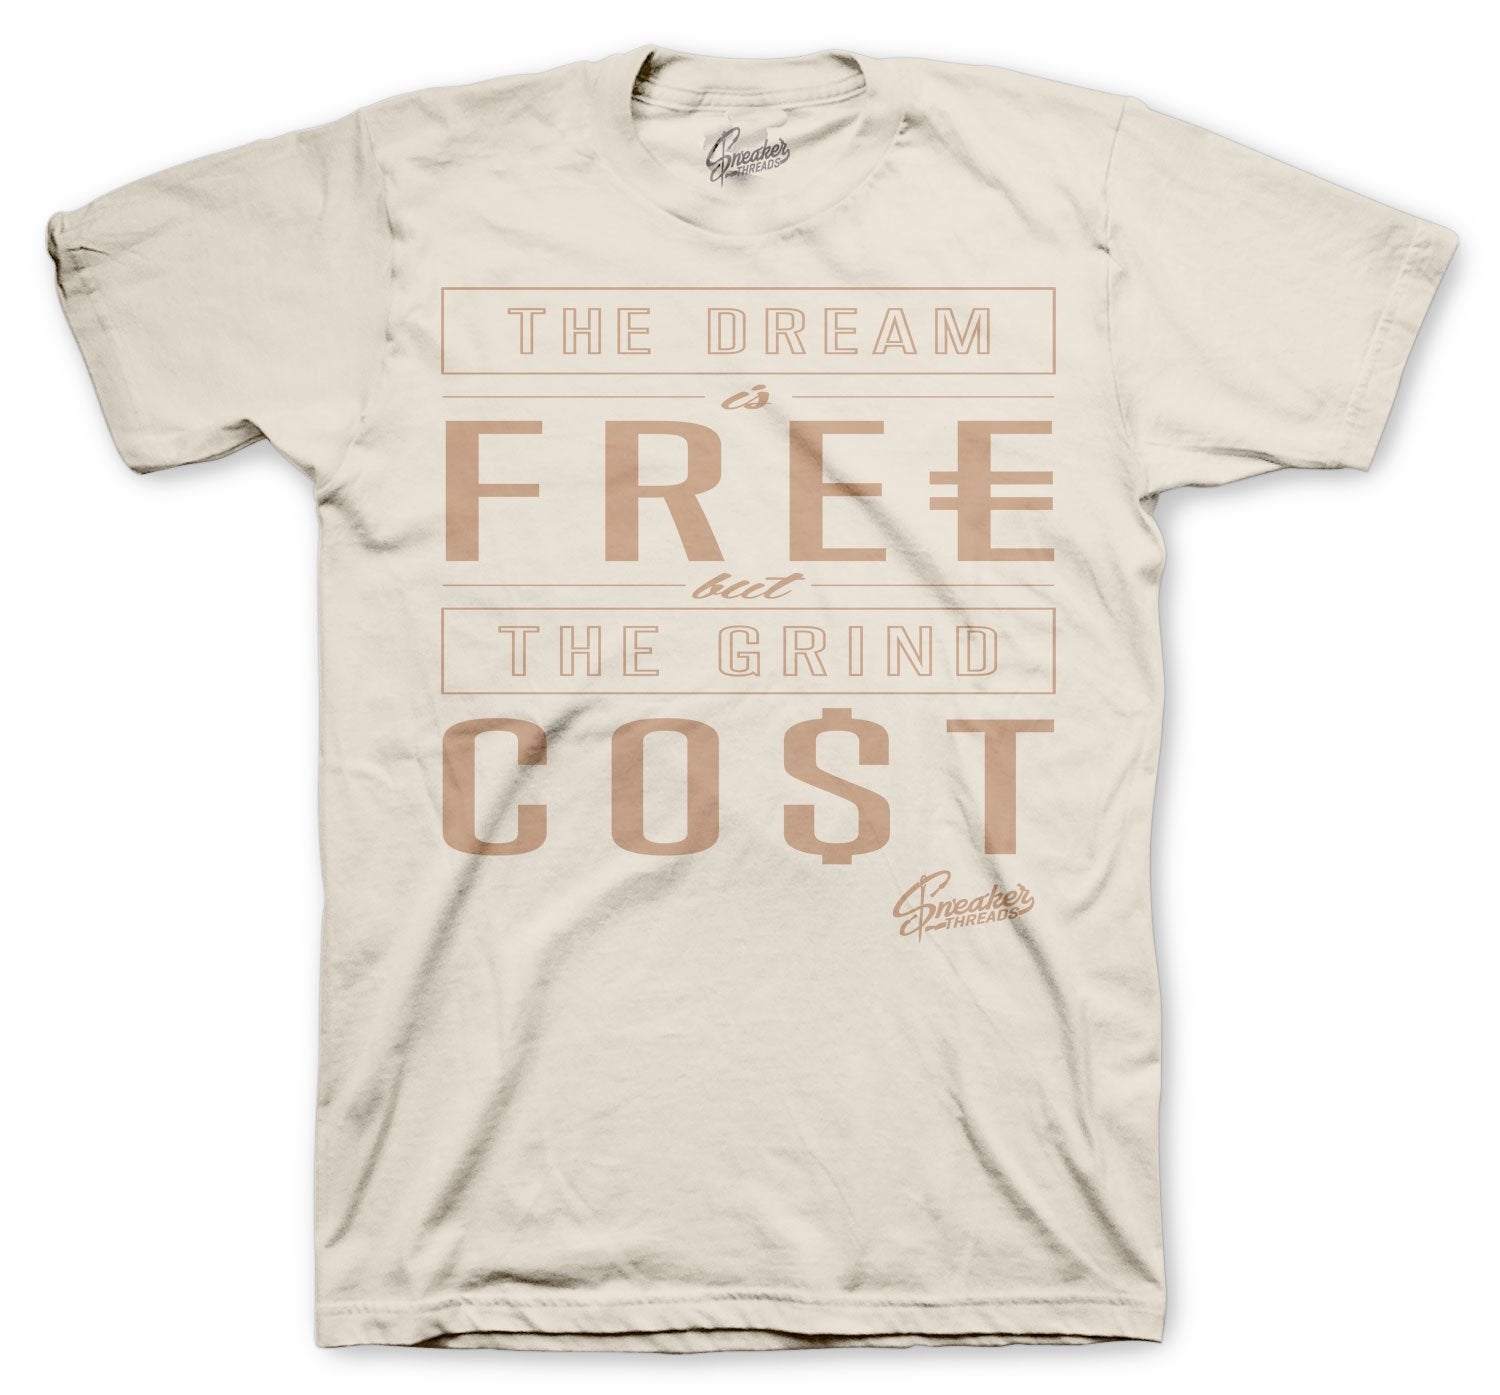 Yeezy 500 Stone Dream Men shirt to match sneaker release